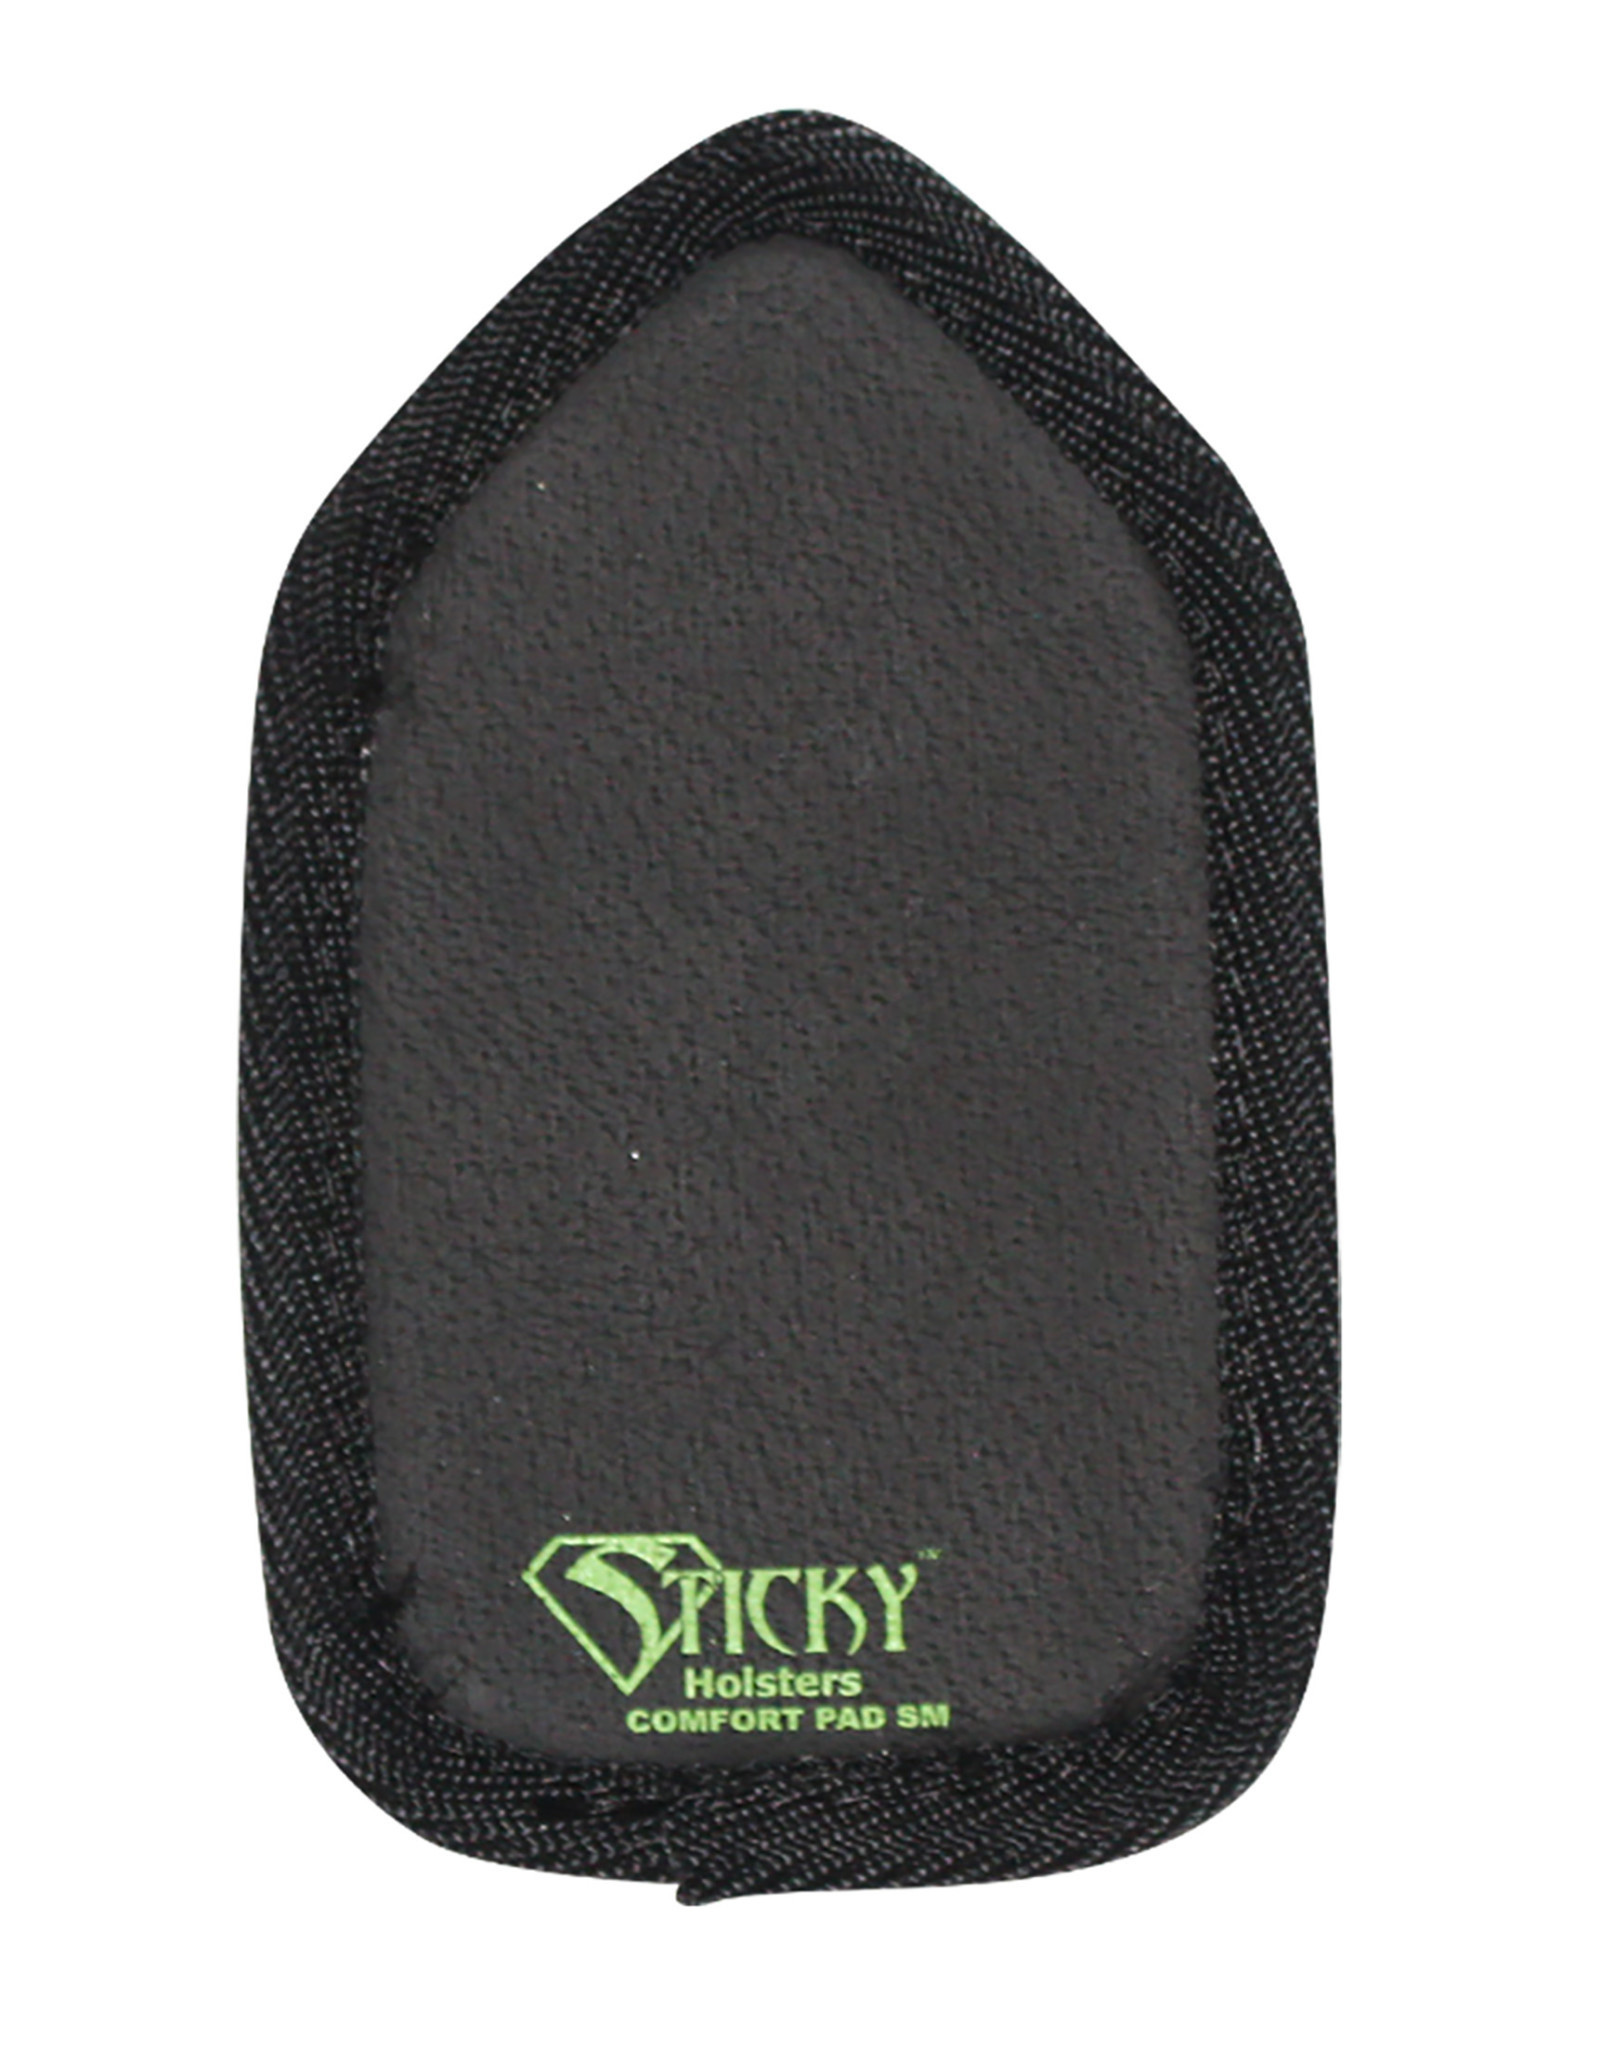 Sticky Holster Comfort Pad - SM - 6.25"x3.75"